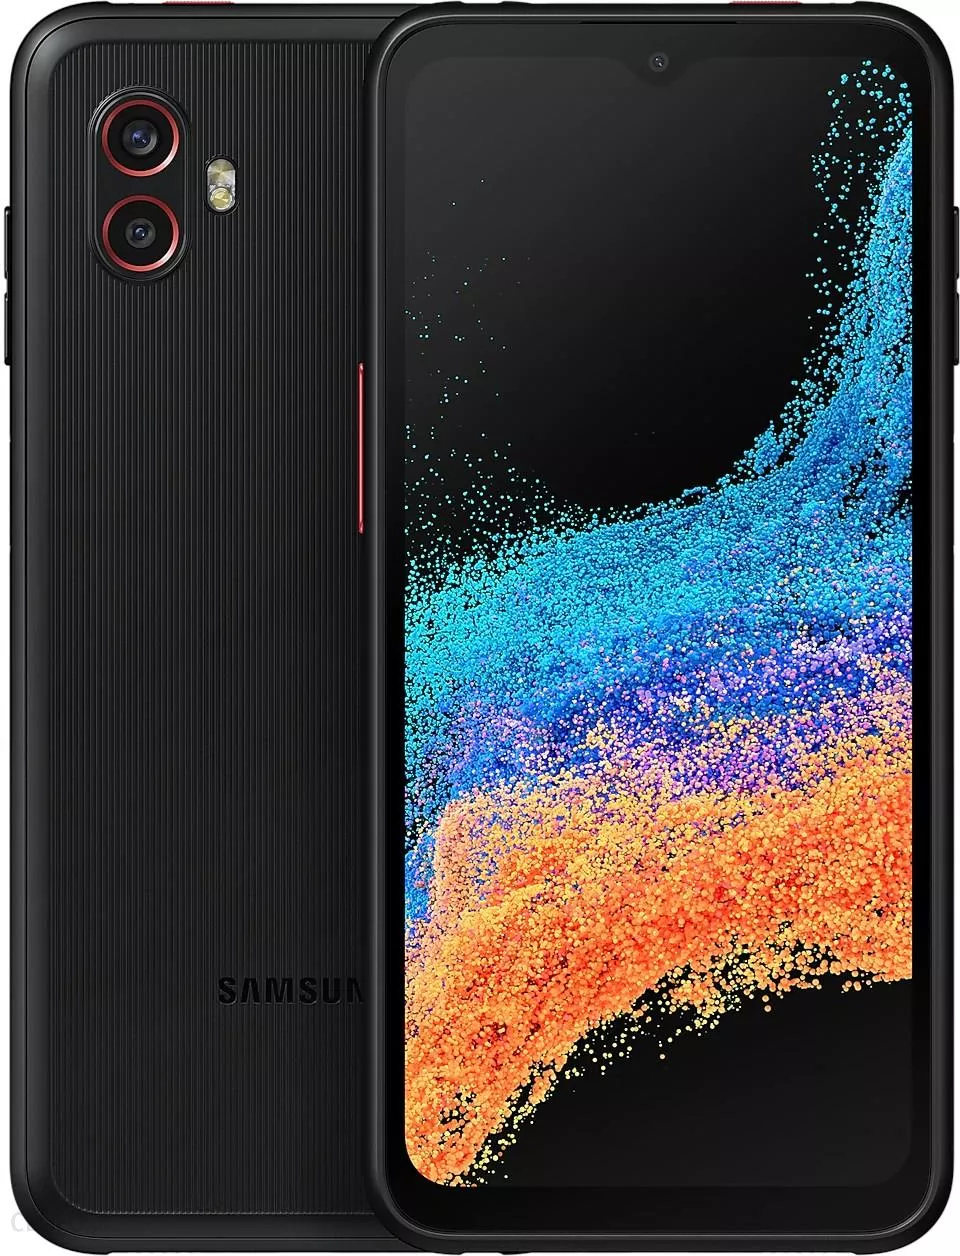 Samsung Galaxy Xcover6 Pro SM-G736 pancerny smartfon